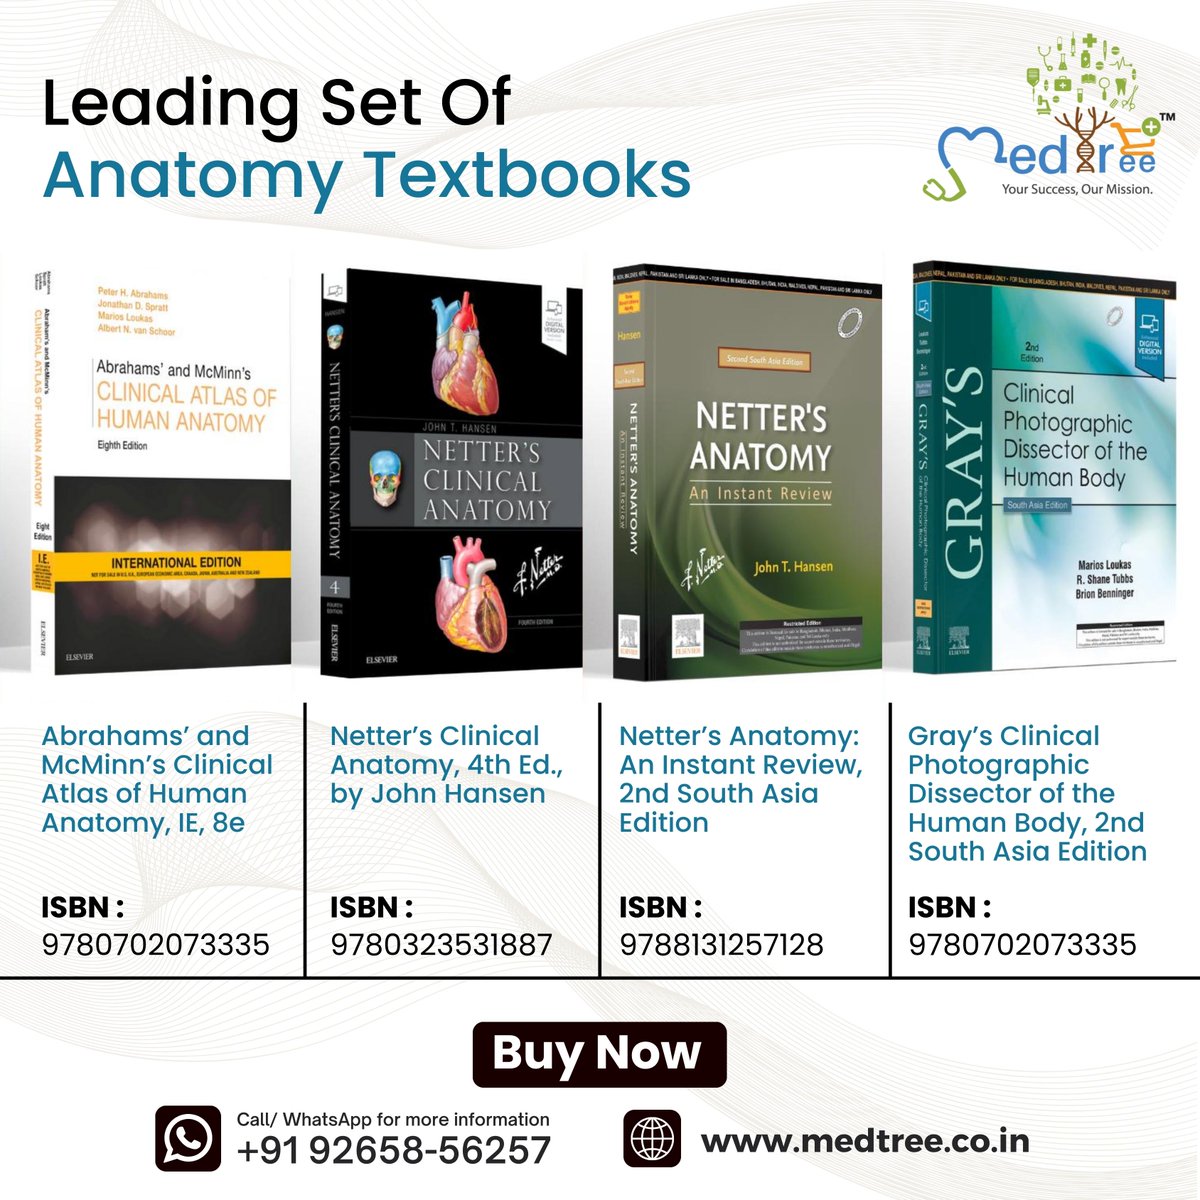 Leading Set of Anatomy Textbooks
Buy Now : medtree.co.in/?s=anatomy+els…

#anatomybook #anatomybooks #mbbs #mbbsstudent #MBBSCollege #mbbsstudent #Elsevier #medicaleducation #MedEd #medstudent #anatomy #medtree #medtreeindia